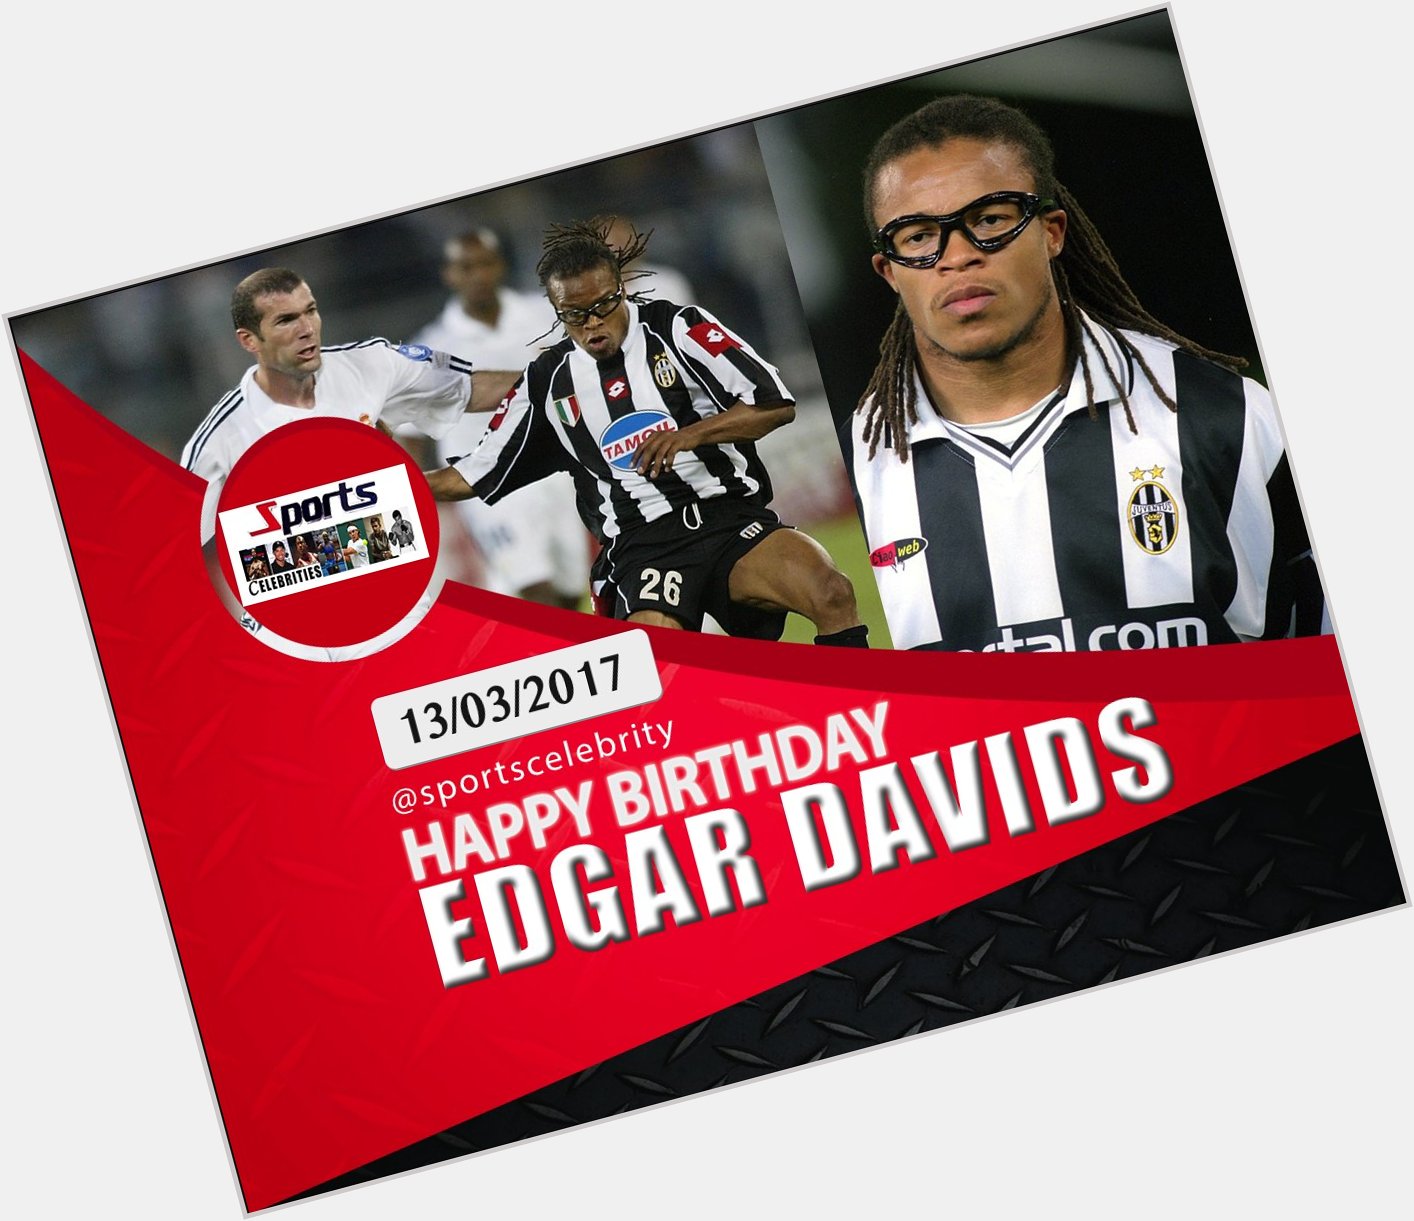 Happy Birthday, Edgar Davids - a winner in 1995 